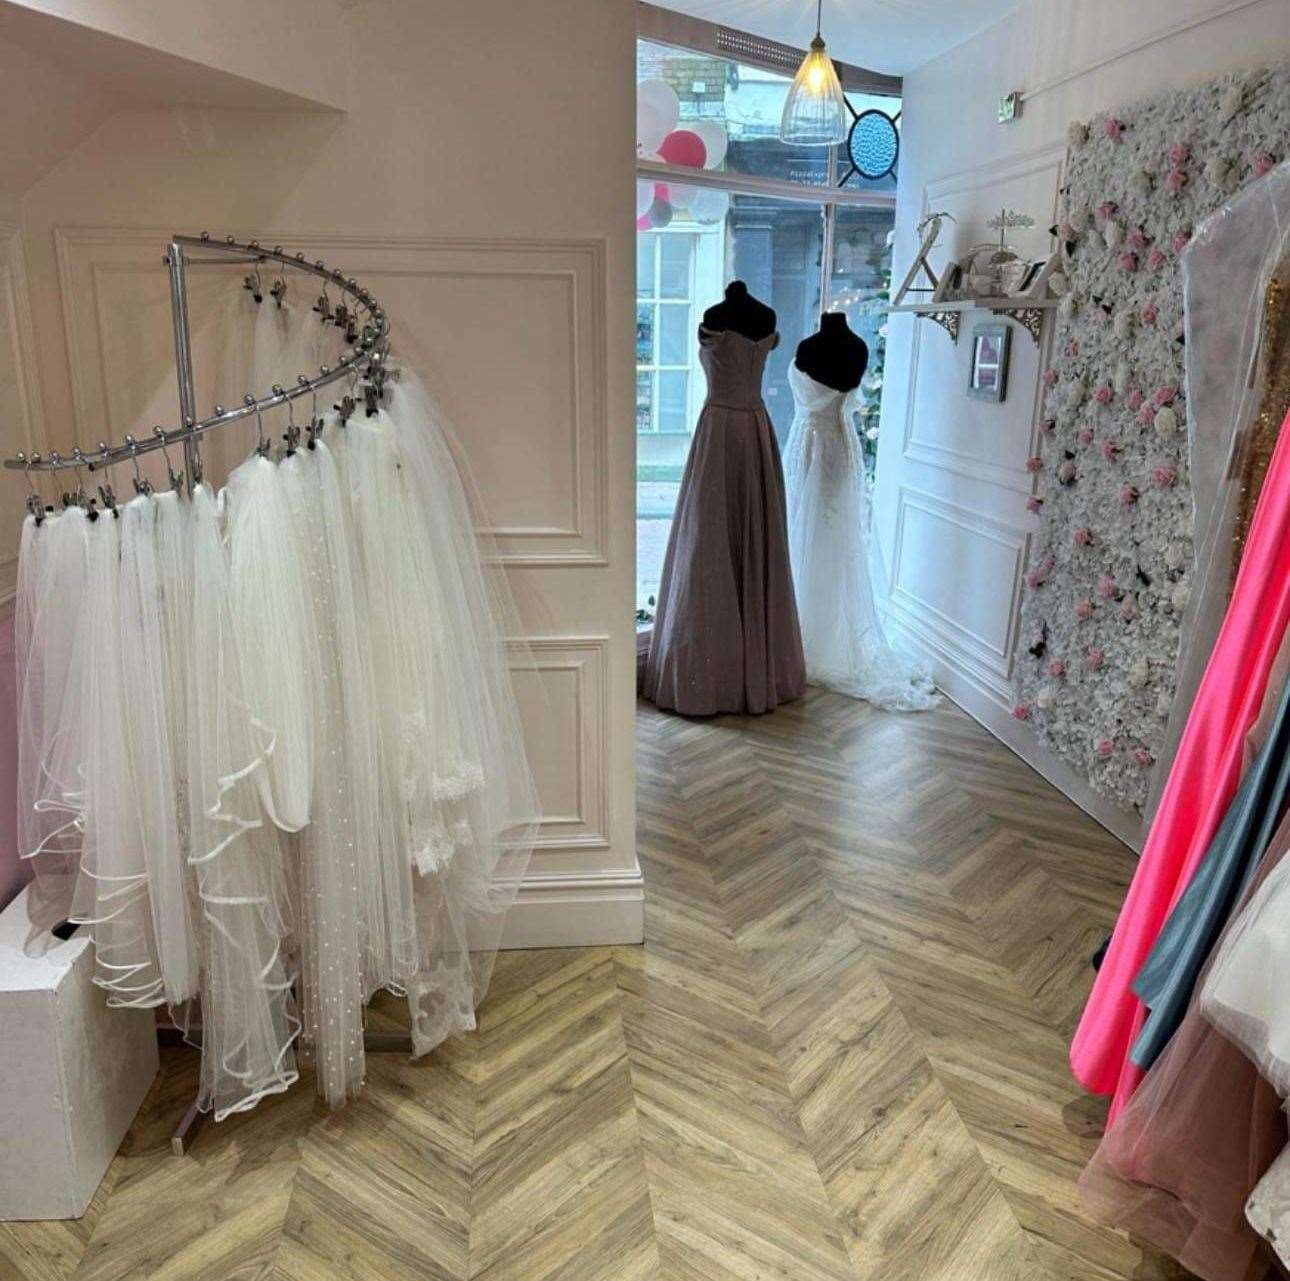 Inside the new bridal boutique. Picture: Linda Quayle